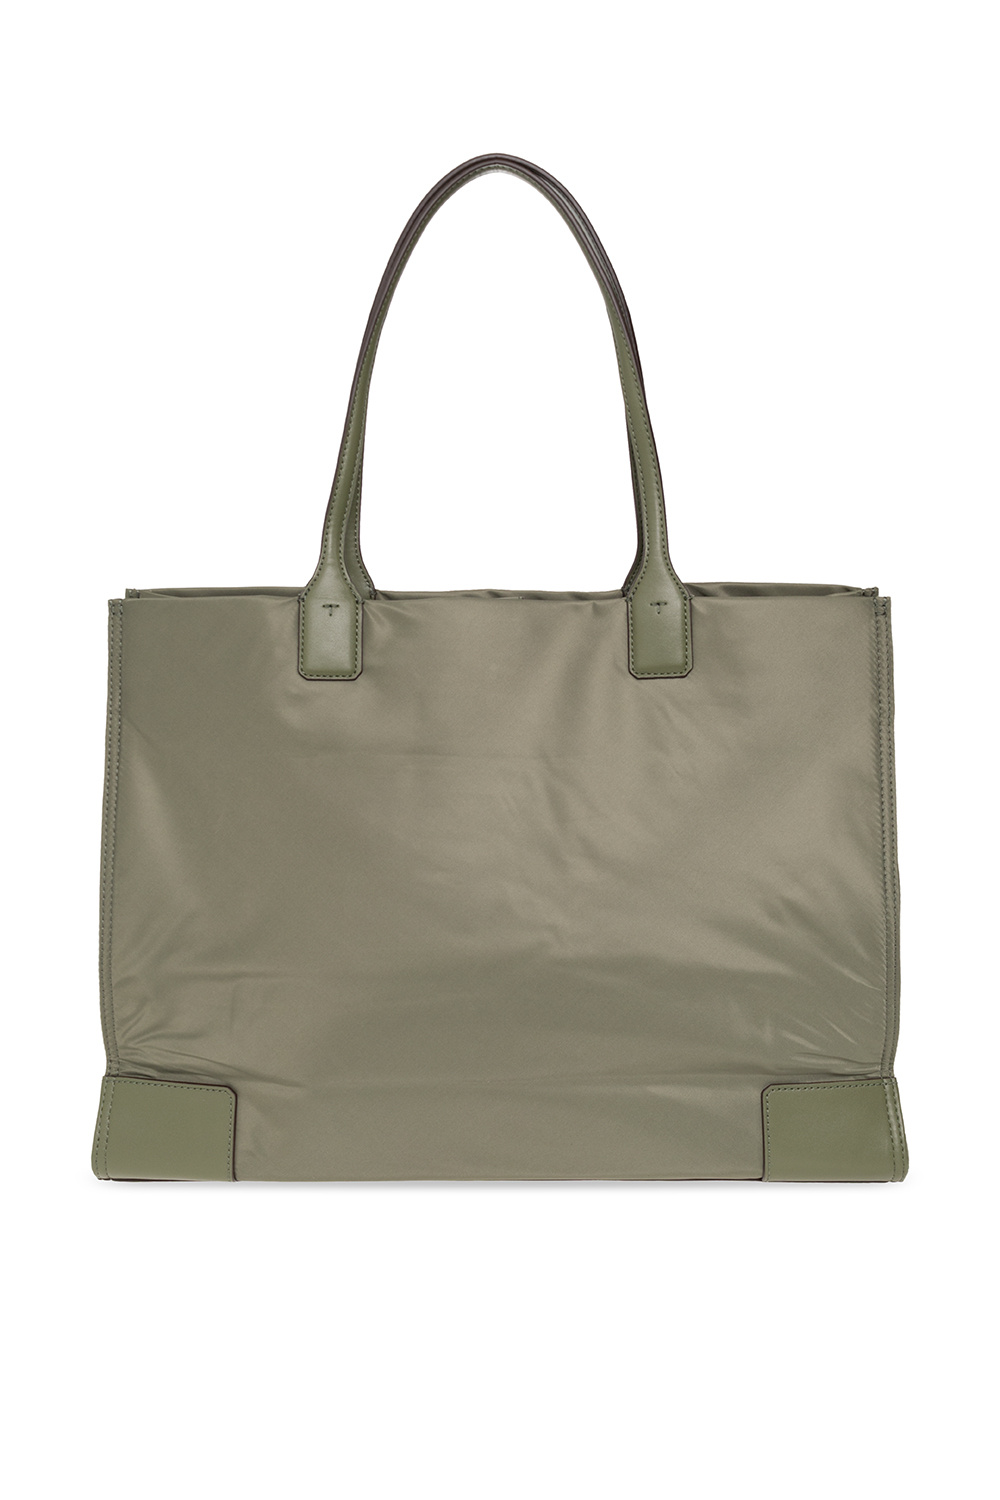 Tory Burch ‘Ella’ shopper public bag